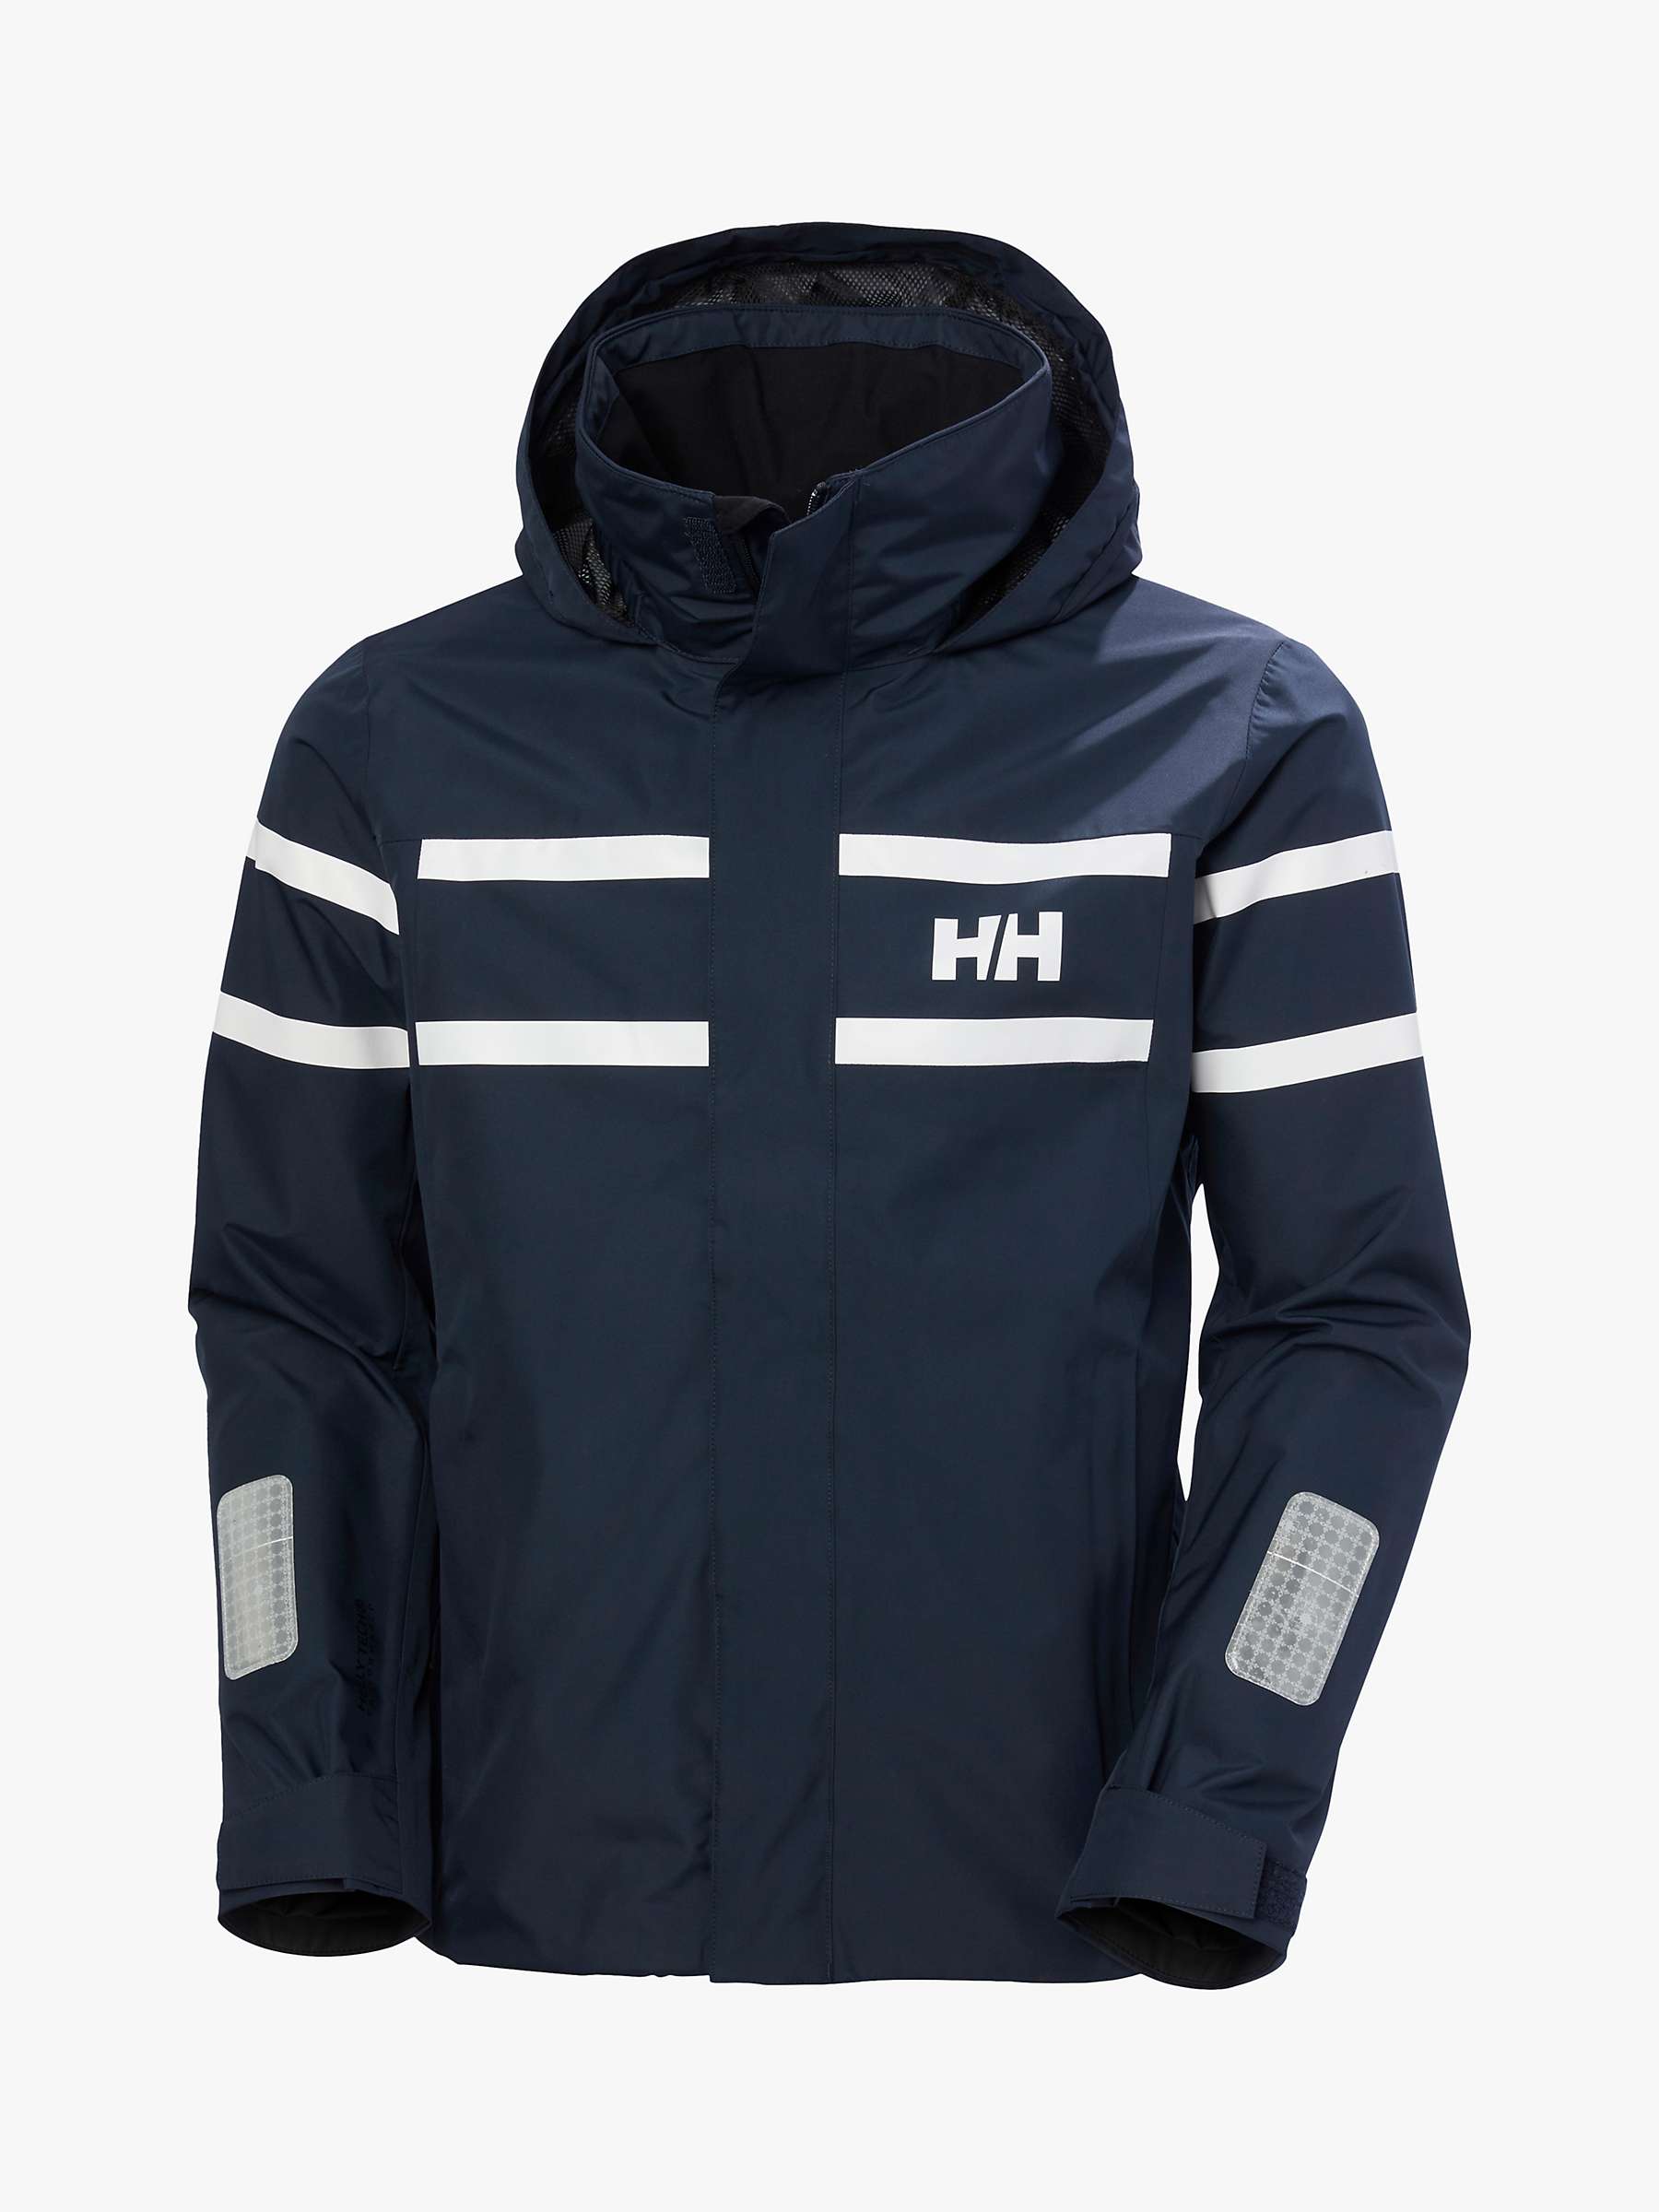 Buy Helly Hansen Salt Insore Waterproof Sailing Jacket, Navy Online at johnlewis.com